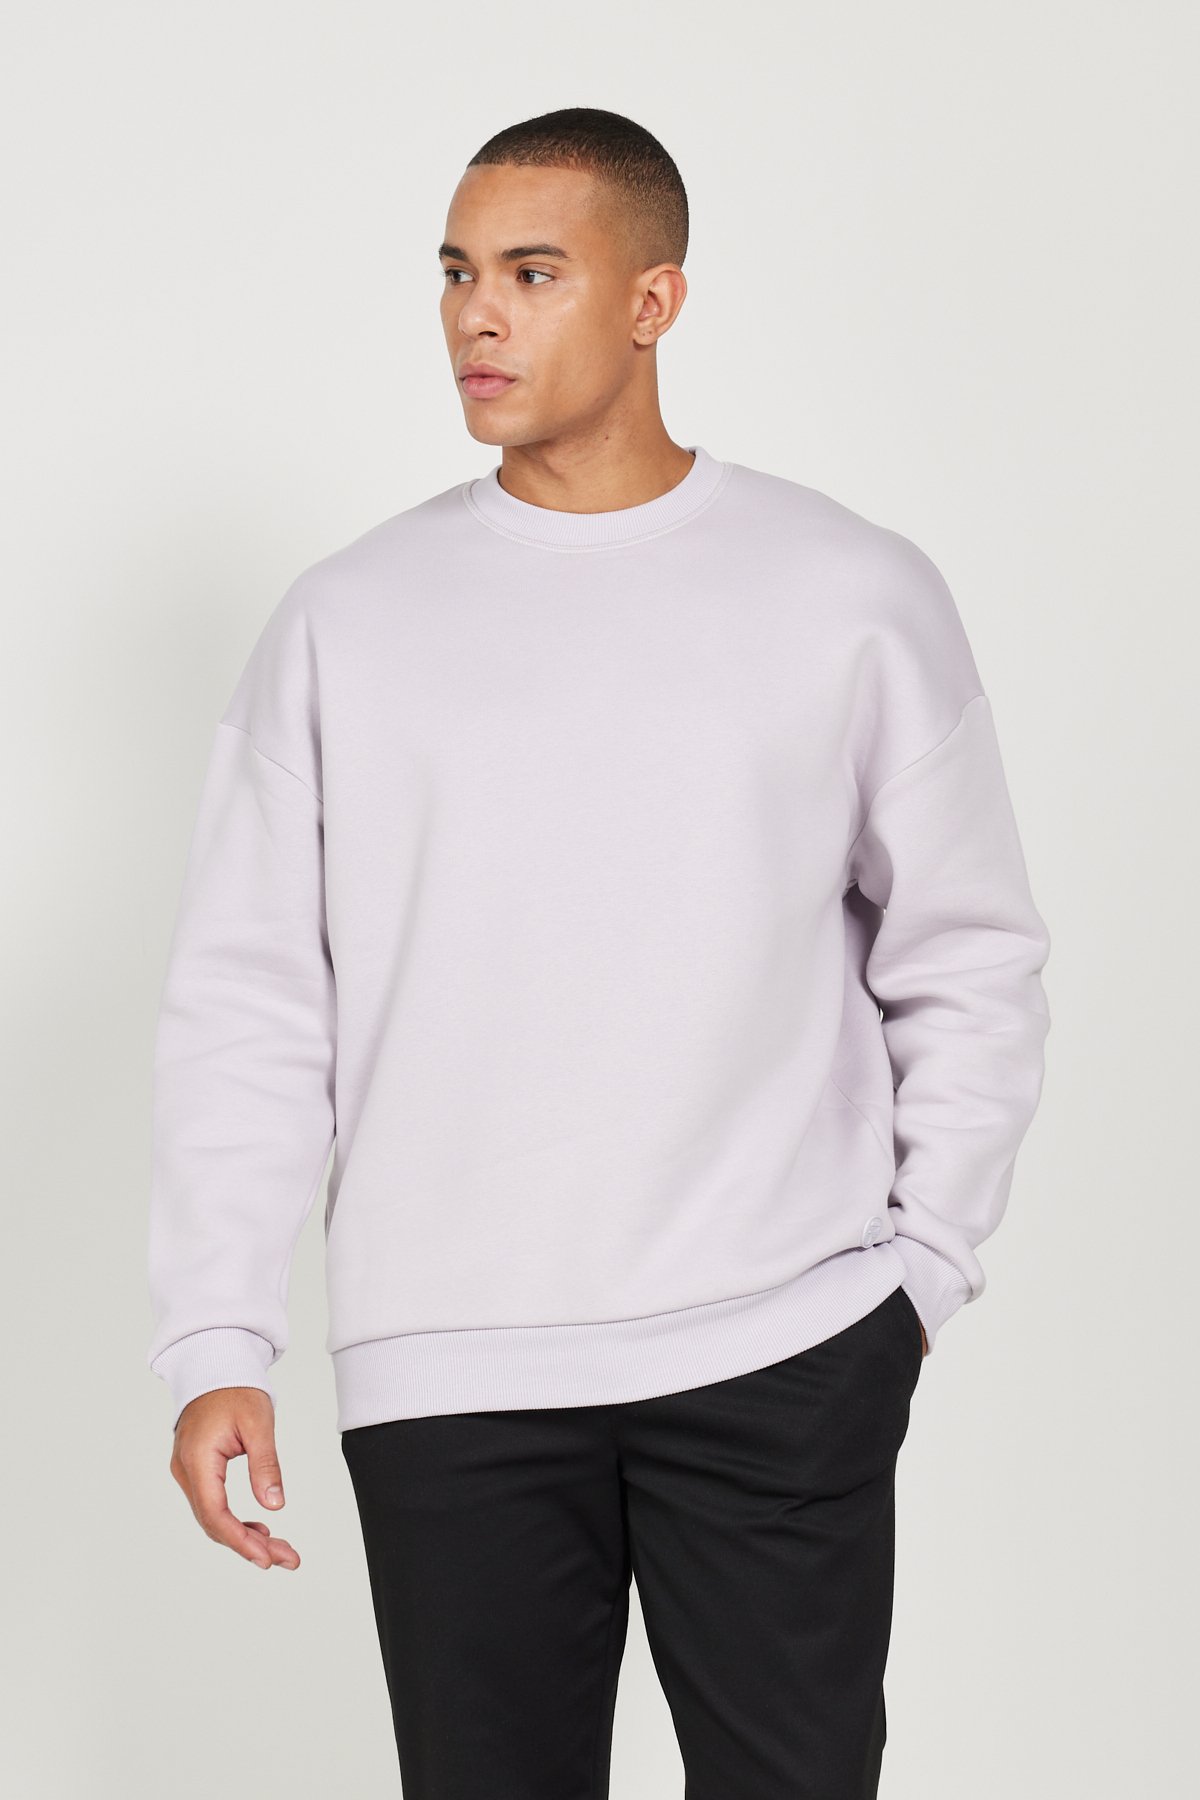 AC&Co / Altınyıldız Classics Men's Lilac Oversize Fit Loose Fit Cotton Fleece 3 Thread Crew Neck Sweatshirt